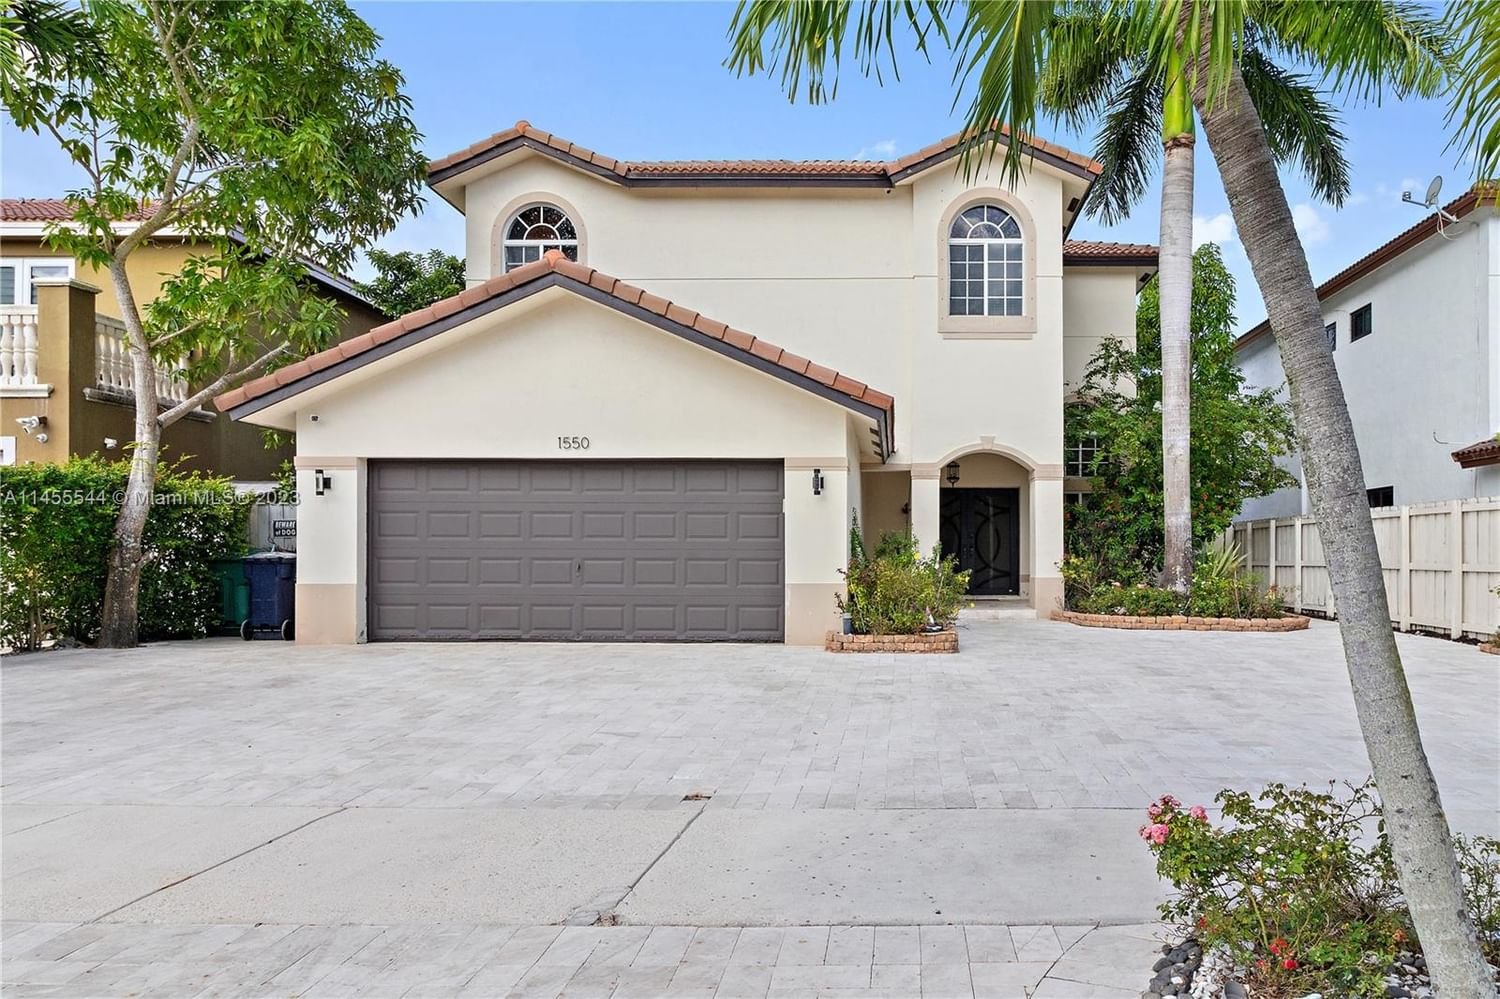 Real estate property located at 1550 154th Ave, Miami-Dade County, Miami, FL